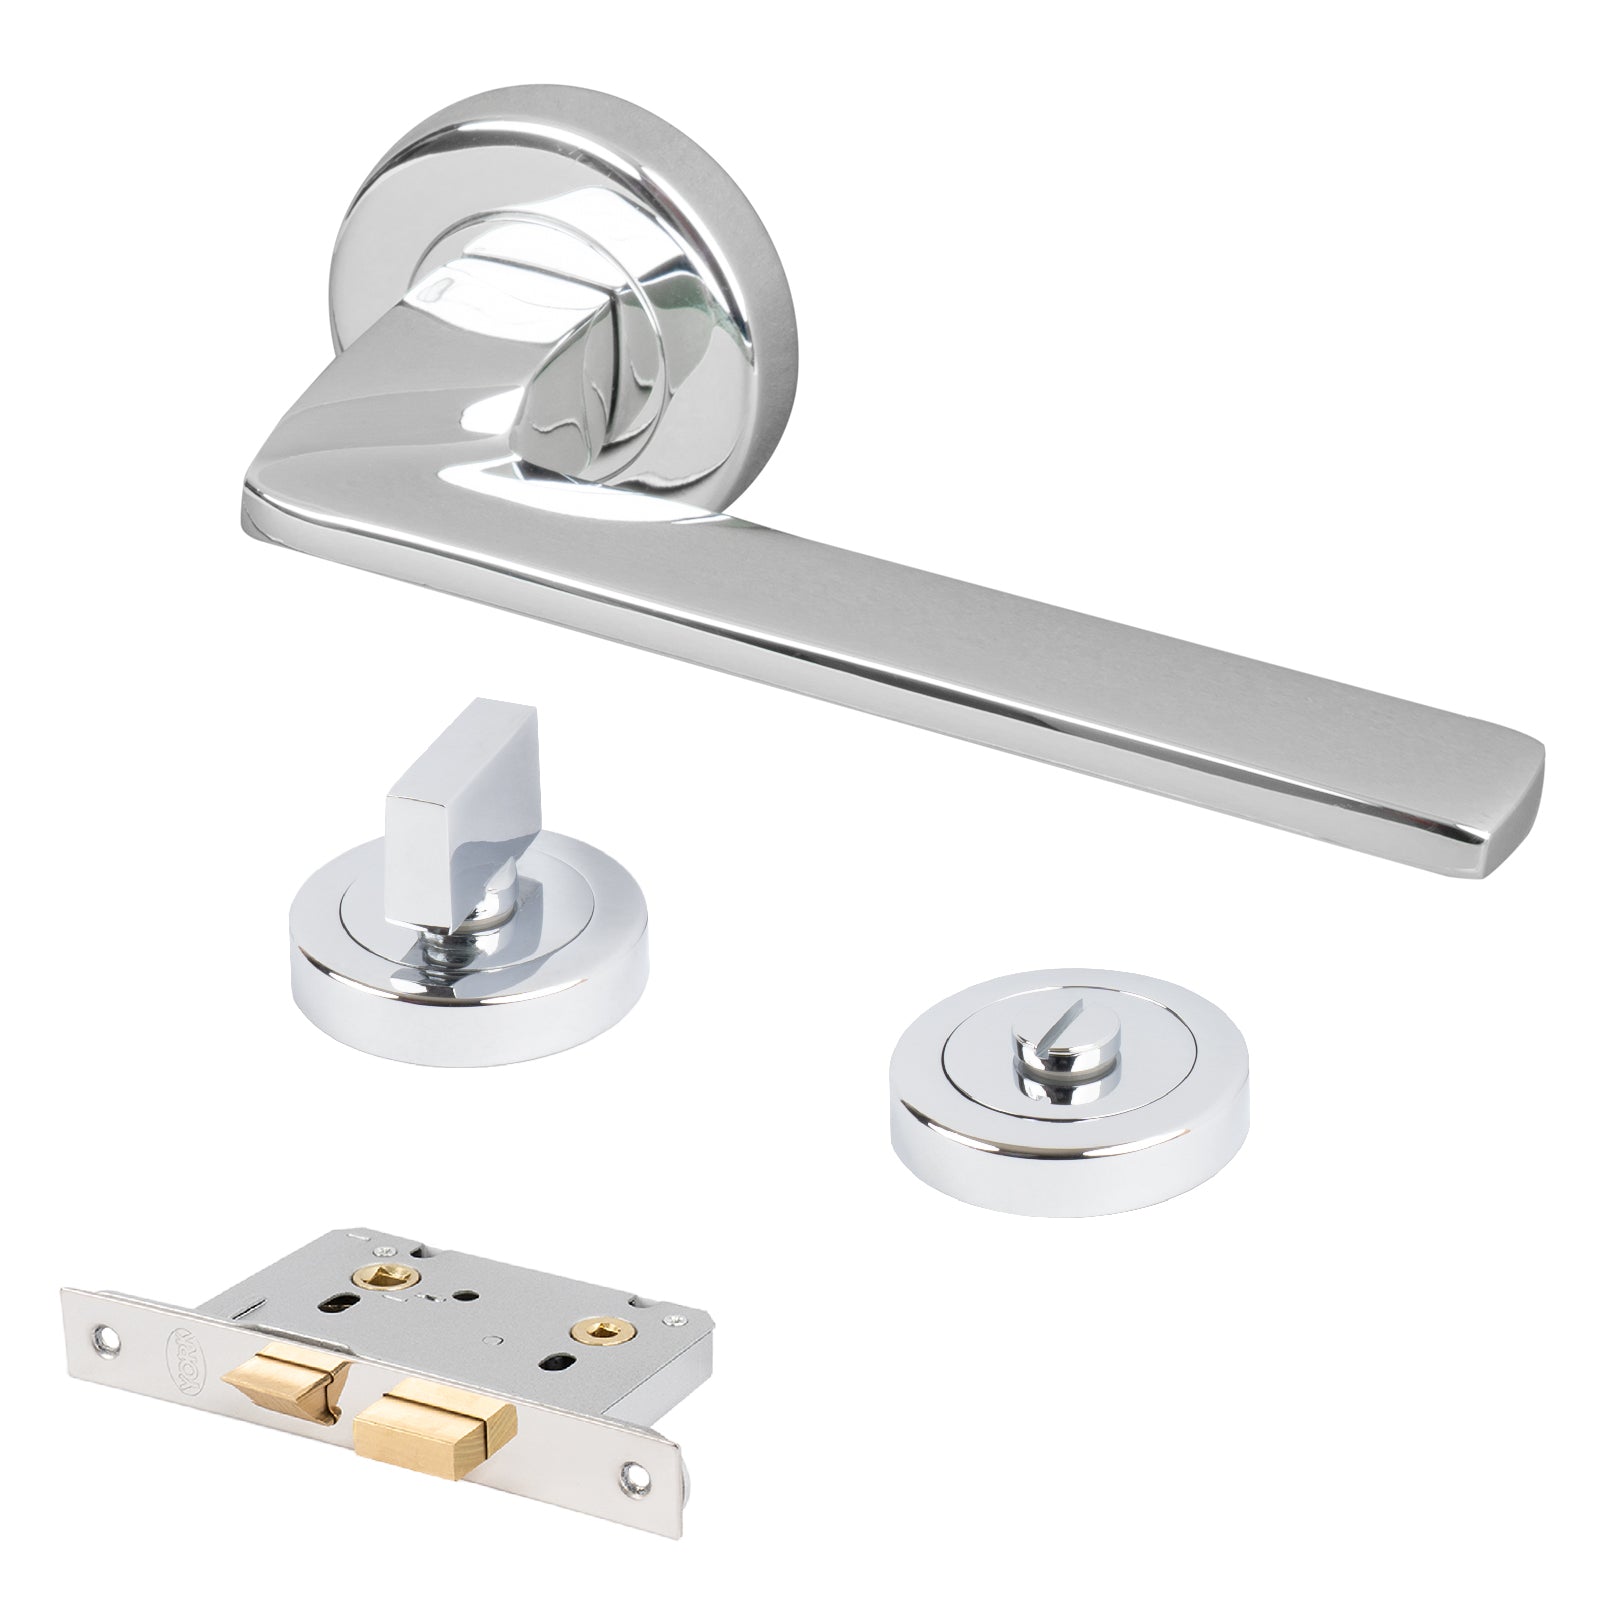 chrome Indigo round rose door handles bathroom thumb turn lock set